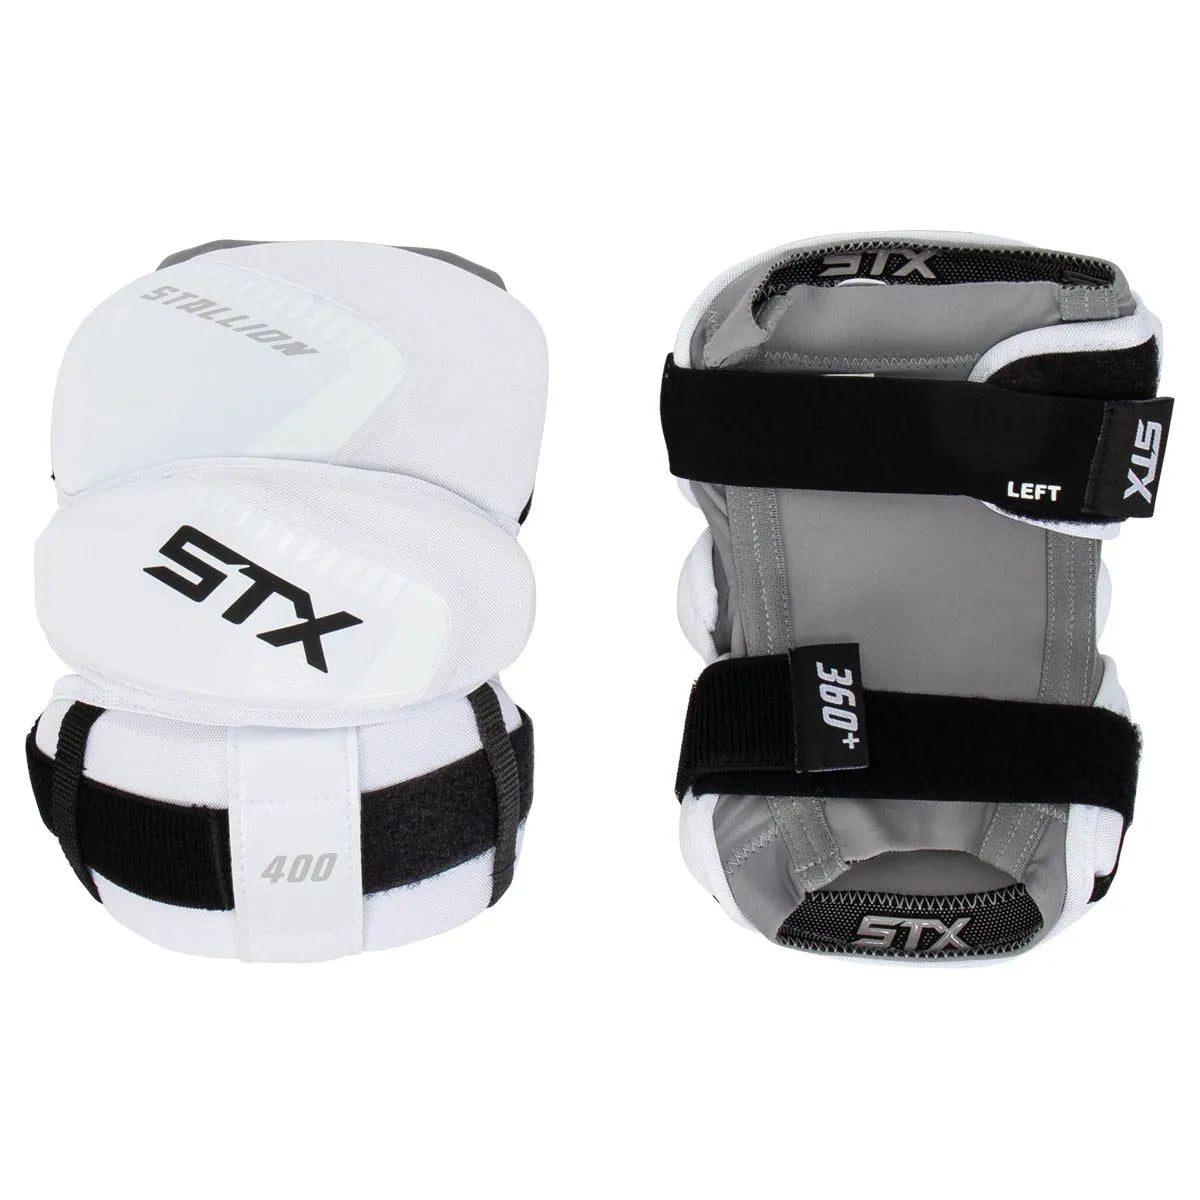 STX Stallion 400 Lacrosse Arm Pad